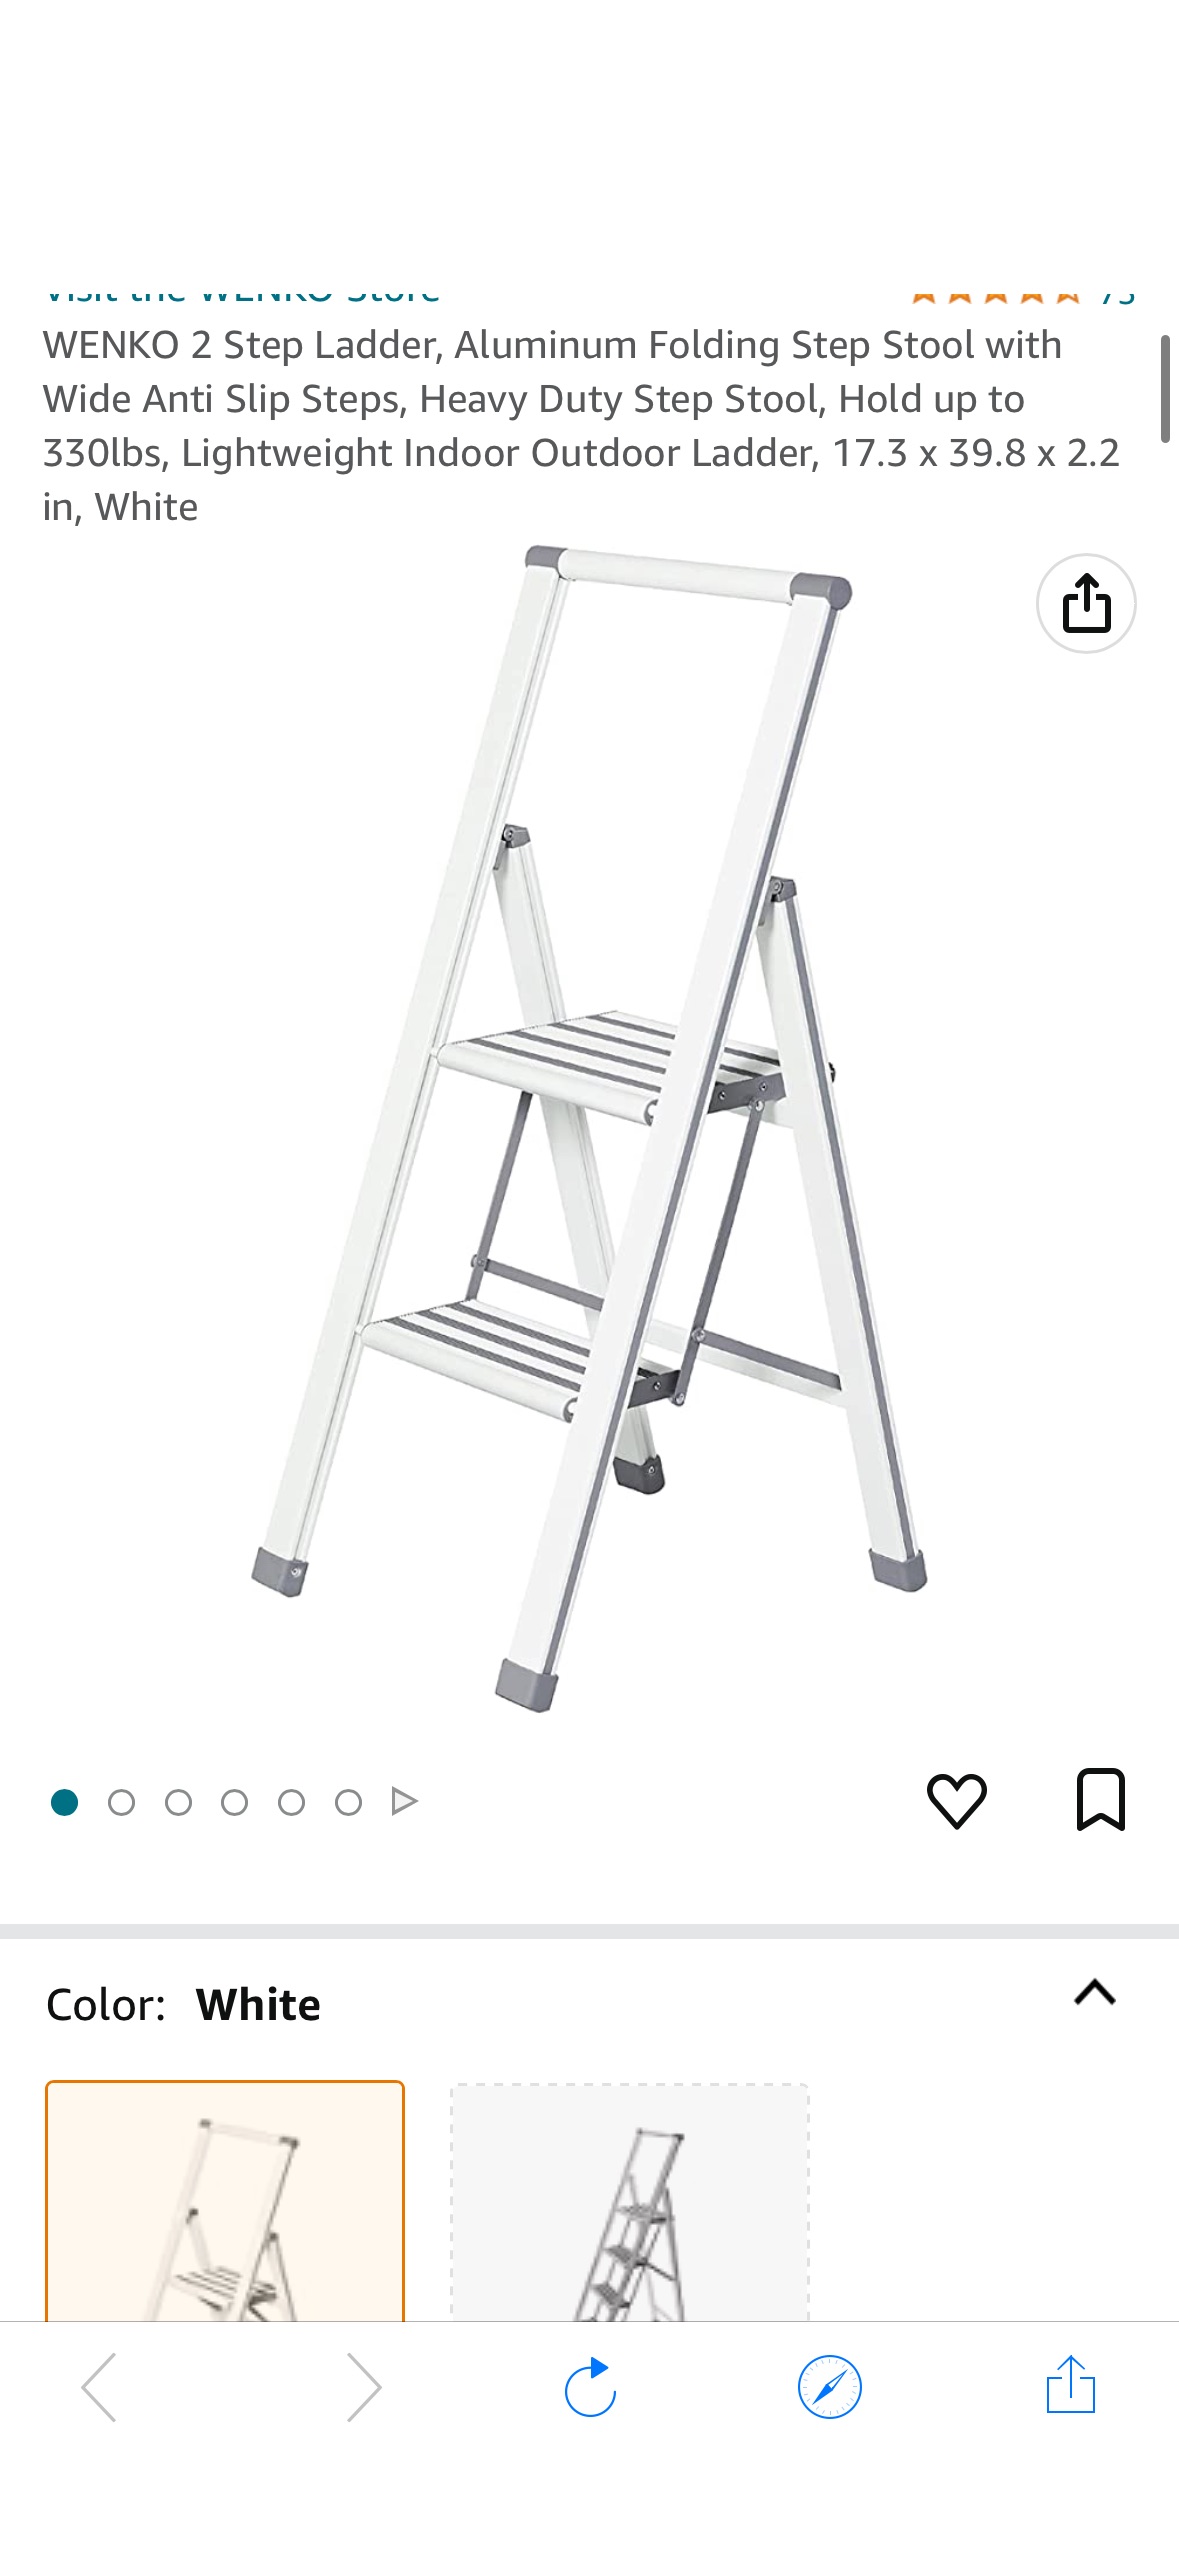 Amazon.com: WENKO 2 Step Ladder, Aluminum Folding Step Stool with Wide Anti Slip Steps, Heavy Duty Step Stool